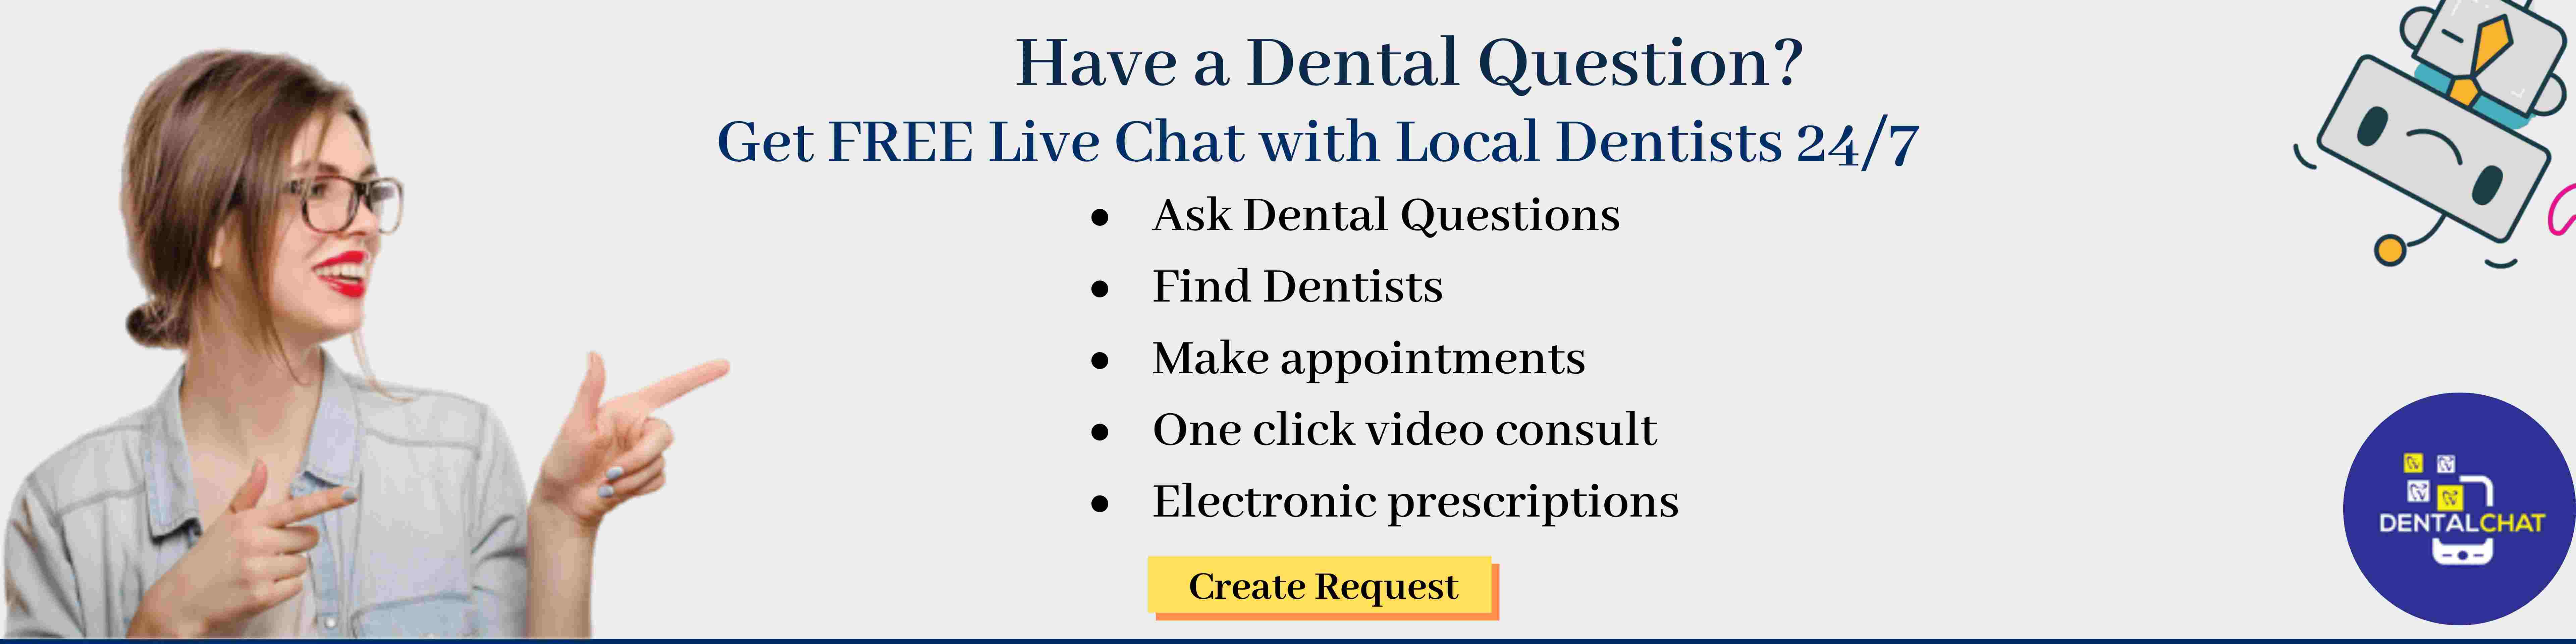 Local Dental Problems Blog, Online Dental Problem Blogging & Dentists Treatment Solutions Chat